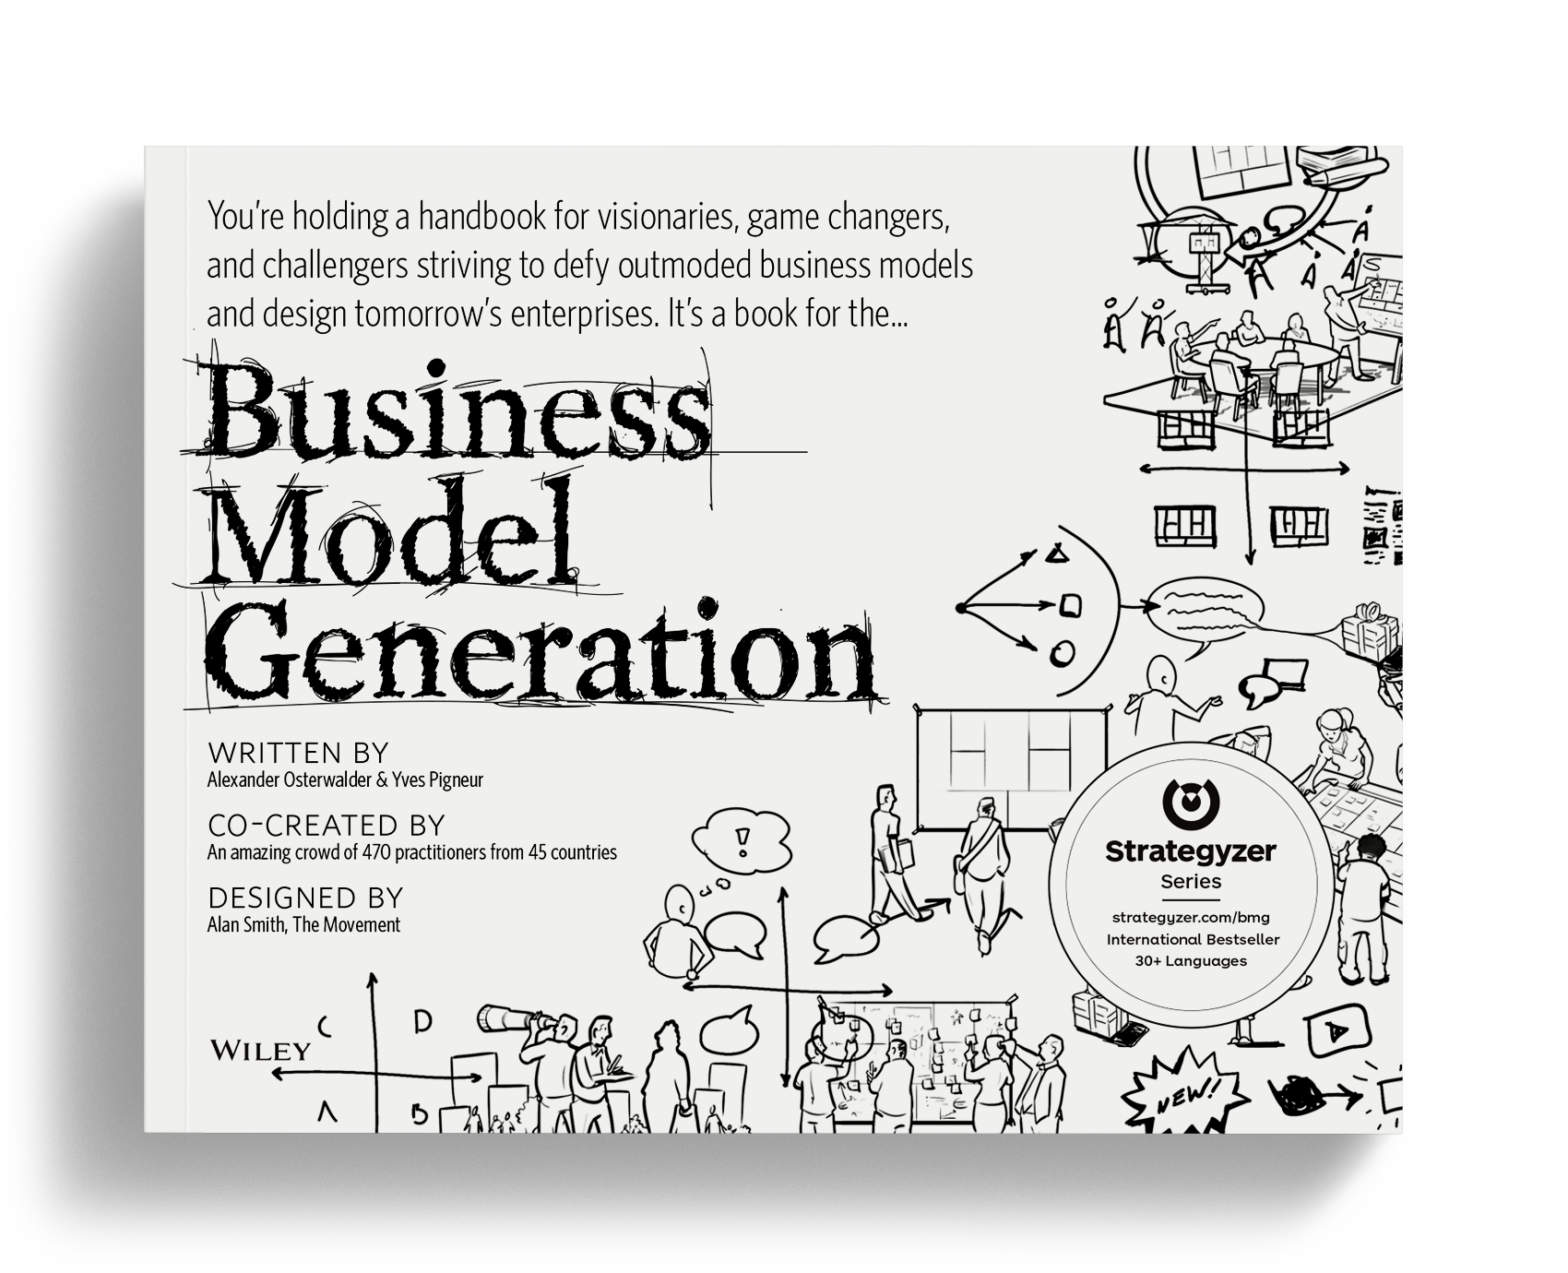 Business model generation by Alexander Osterwalder